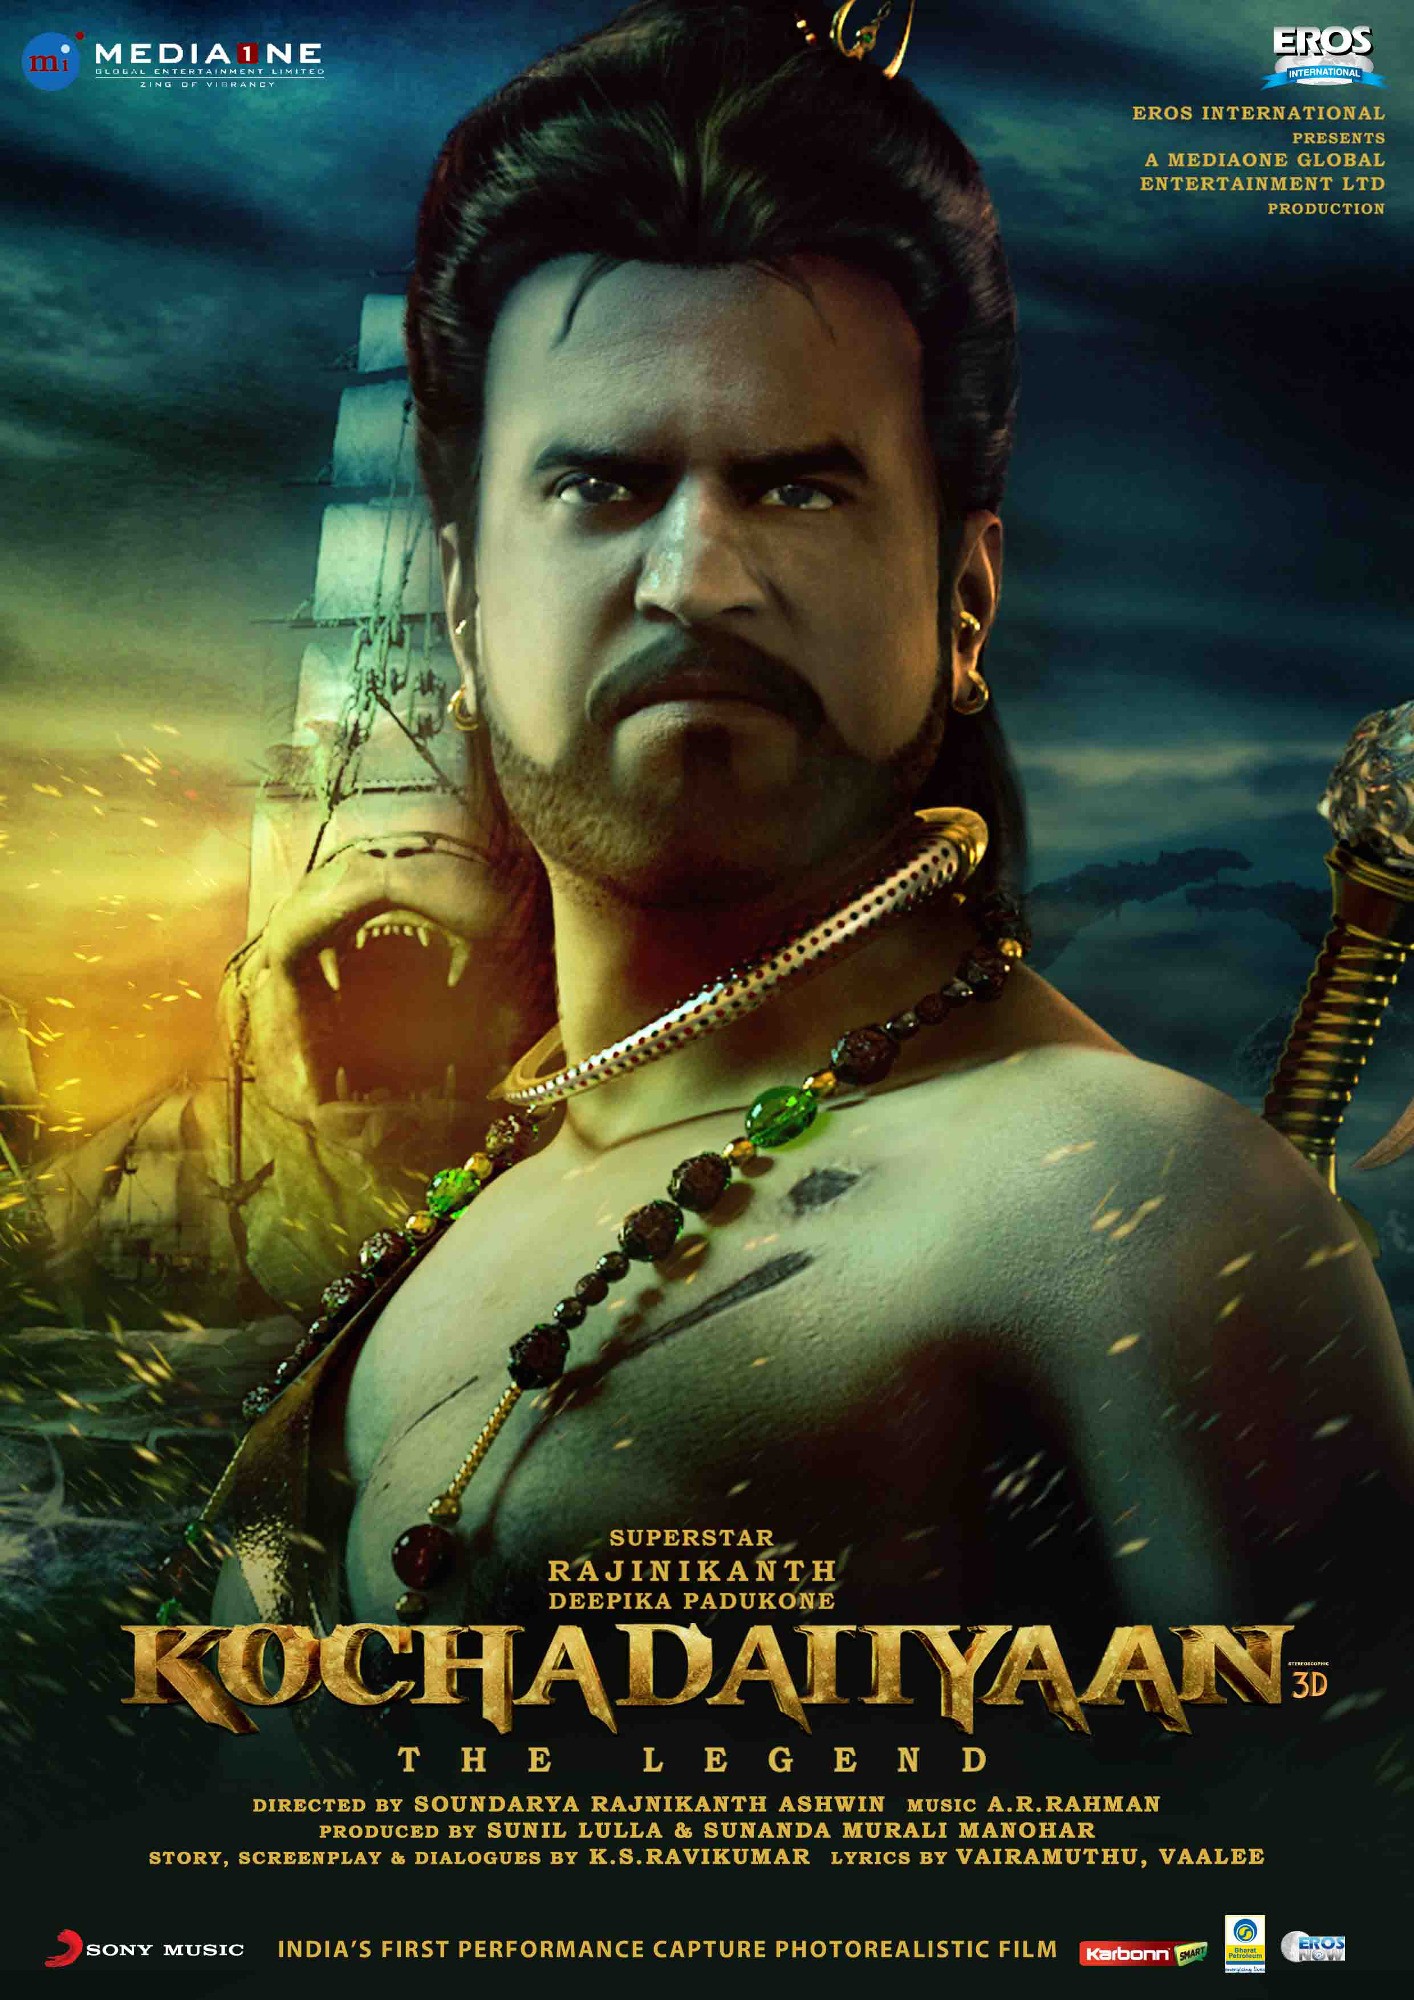 Mega Sized Movie Poster Image for Kochadaiiyaan (#6 of 6)